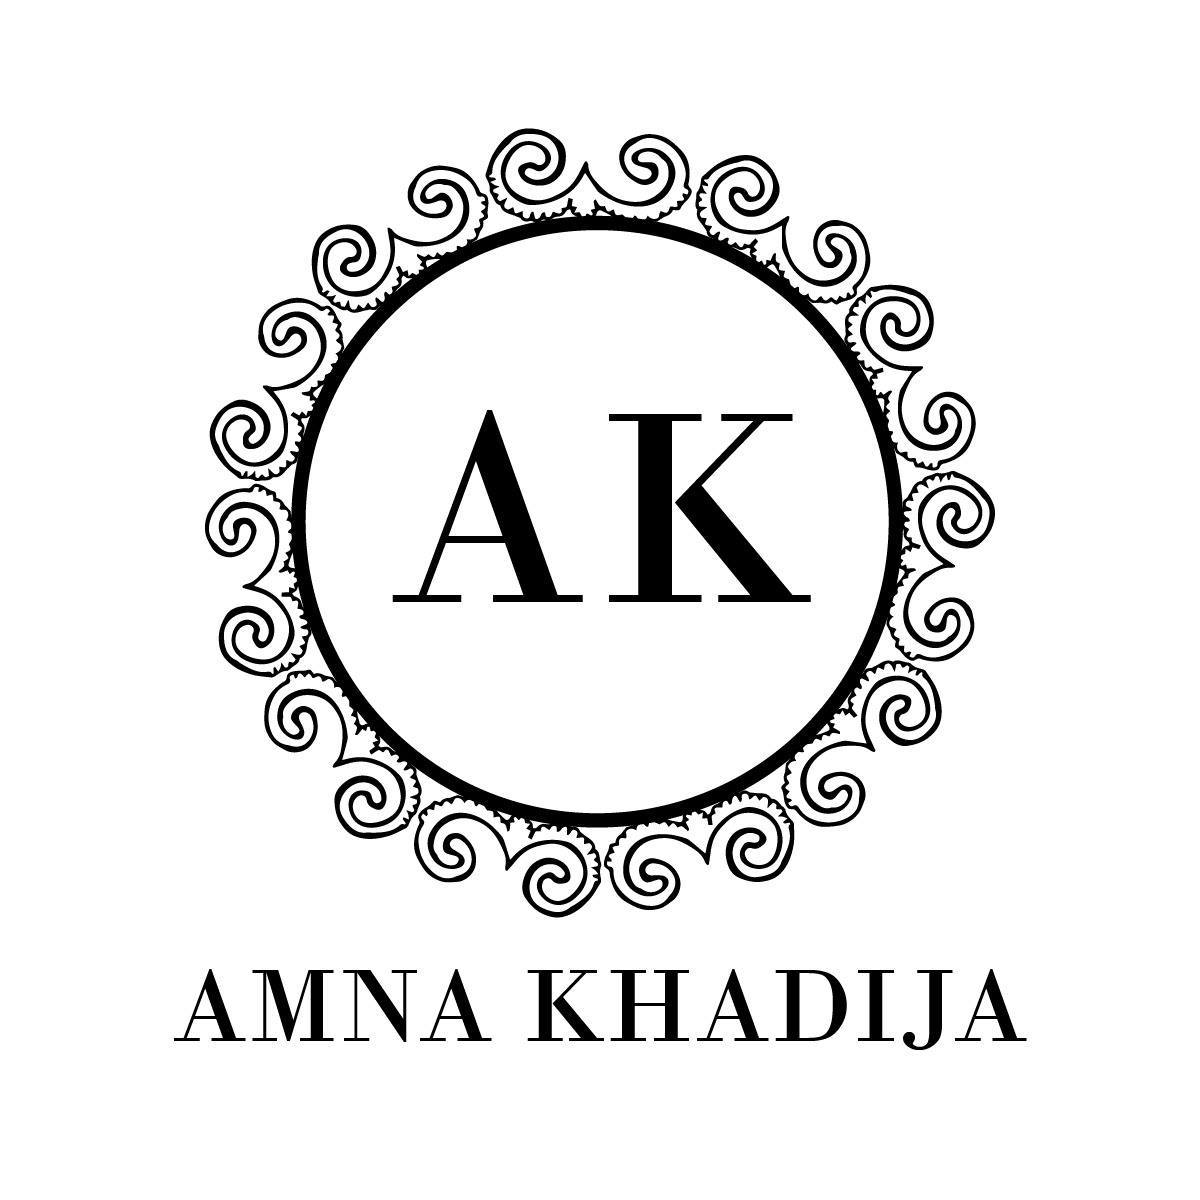 amna khadija lawn collectionHome and LifestyleFashion AccessoriesWest DelhiVikas Puri